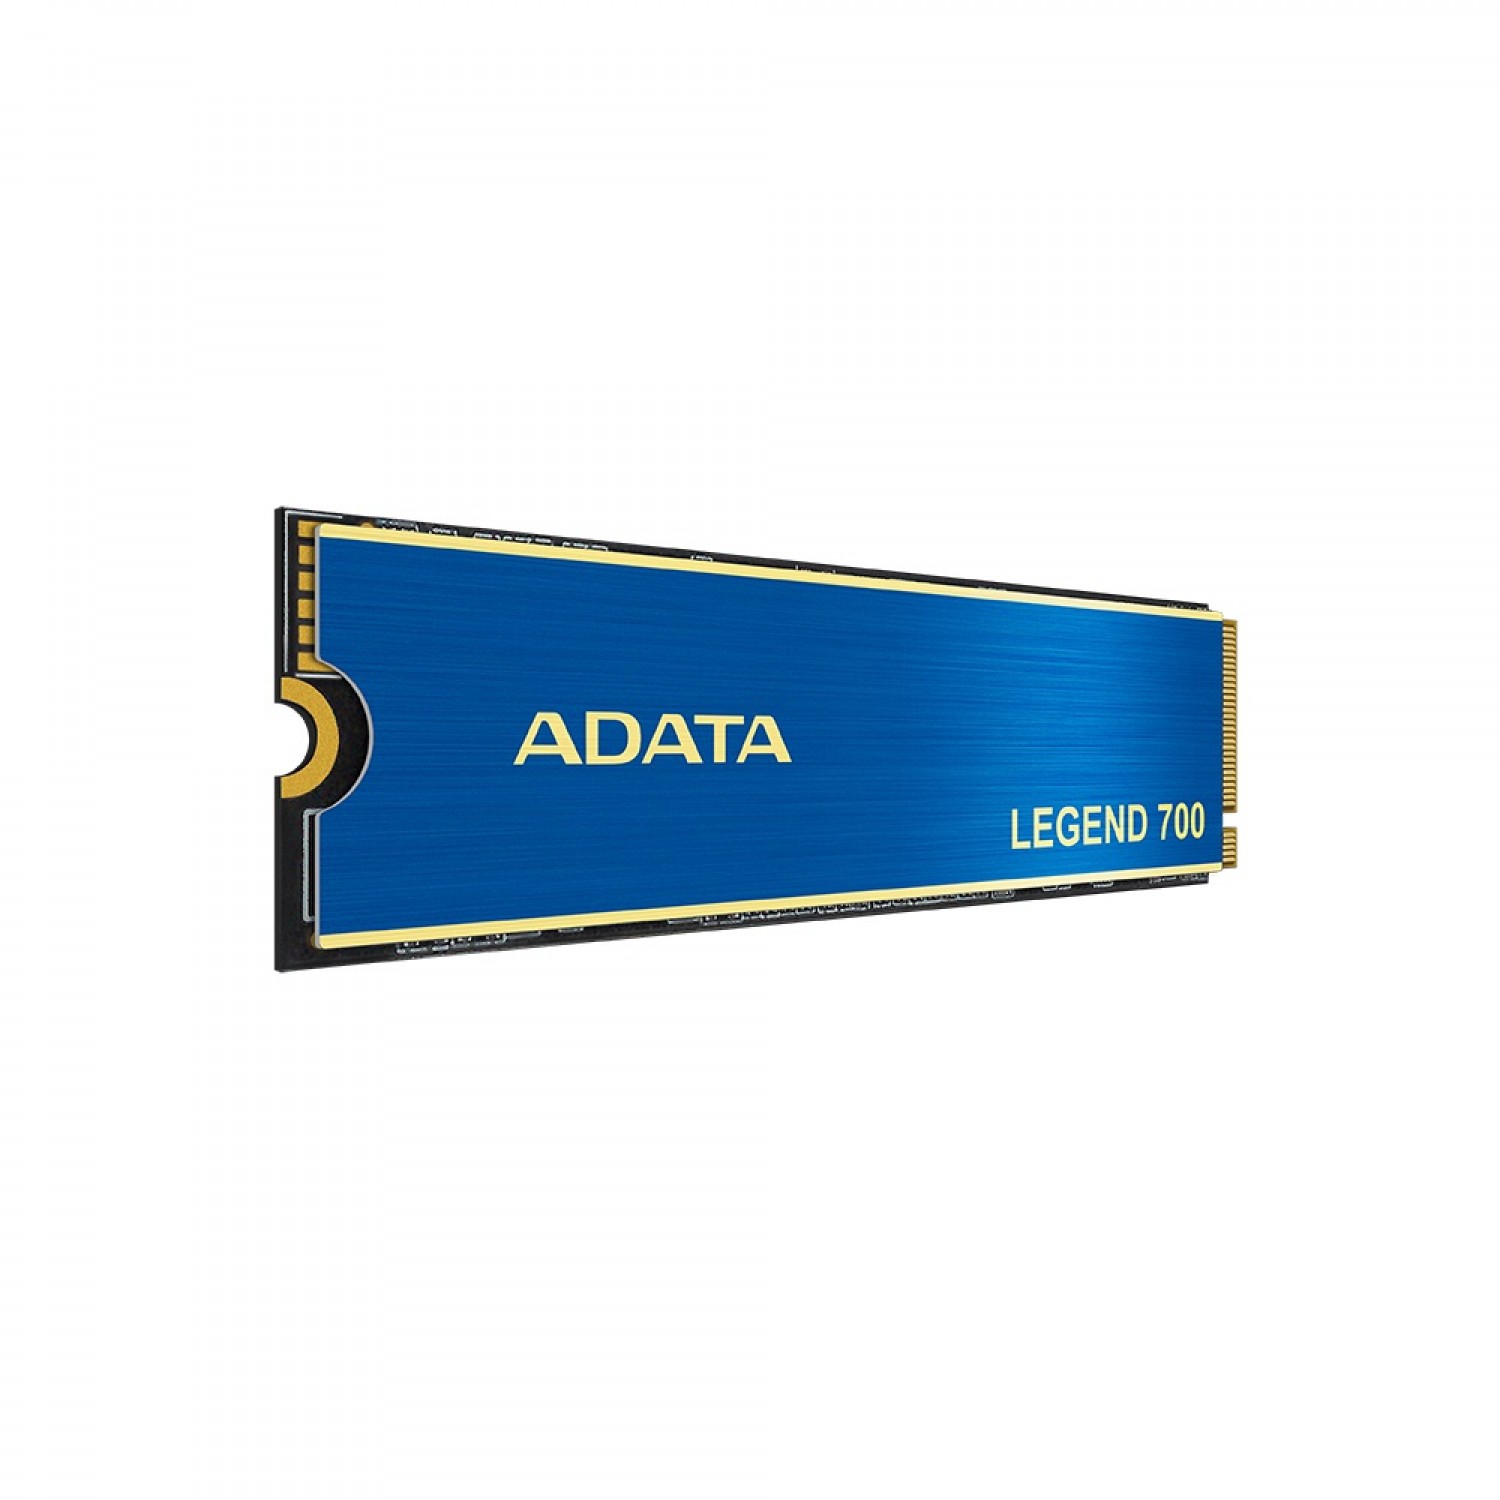 حافظه اس اس دی ADATA Legend 700 512GB-3